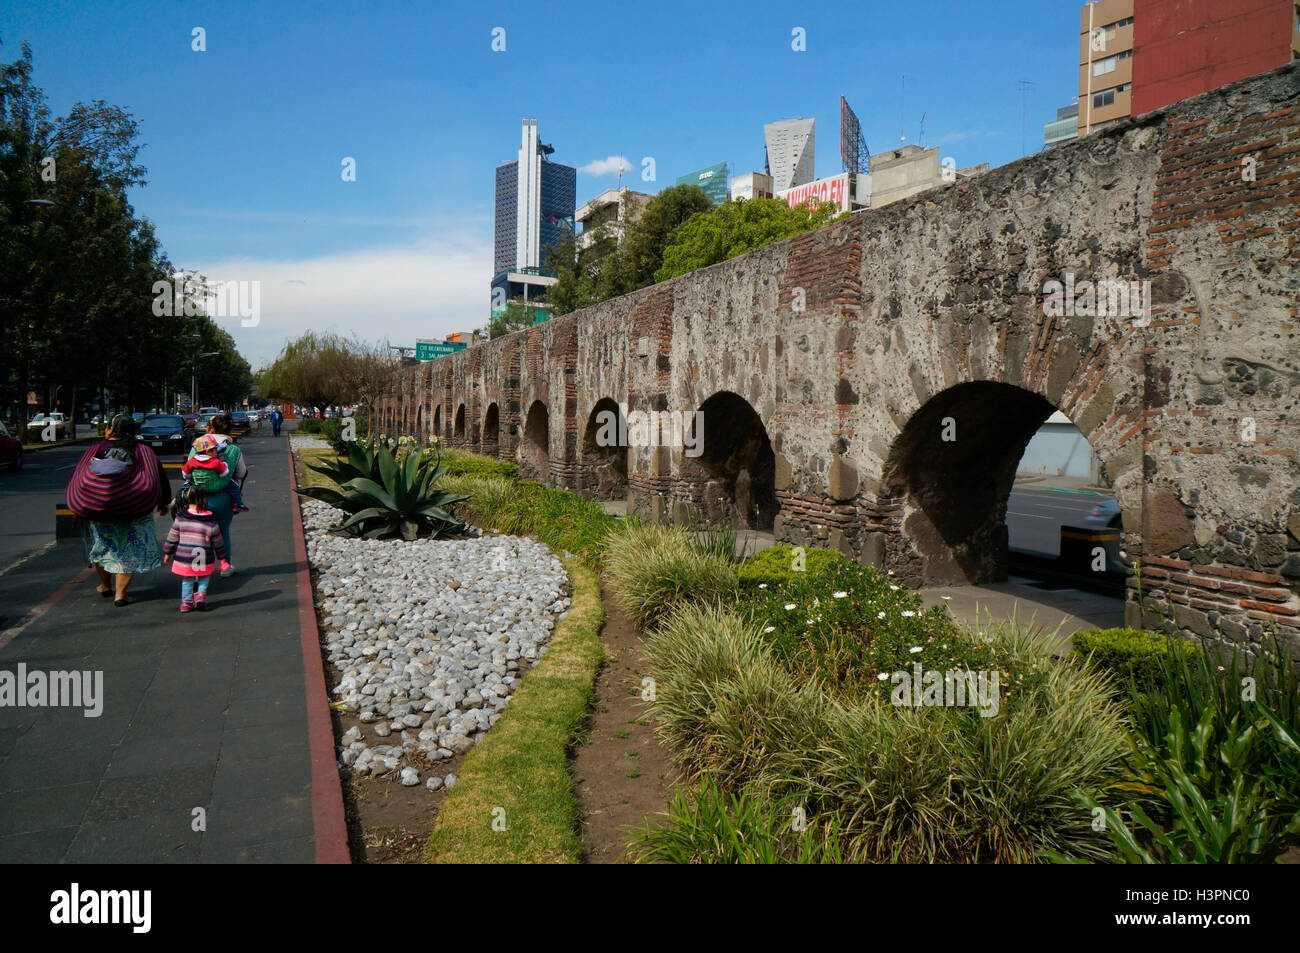 The Chapultepec Aqueduct built by the Aztecs during the Tenochtitlan era, Mexico City, Mexico Stock Photo